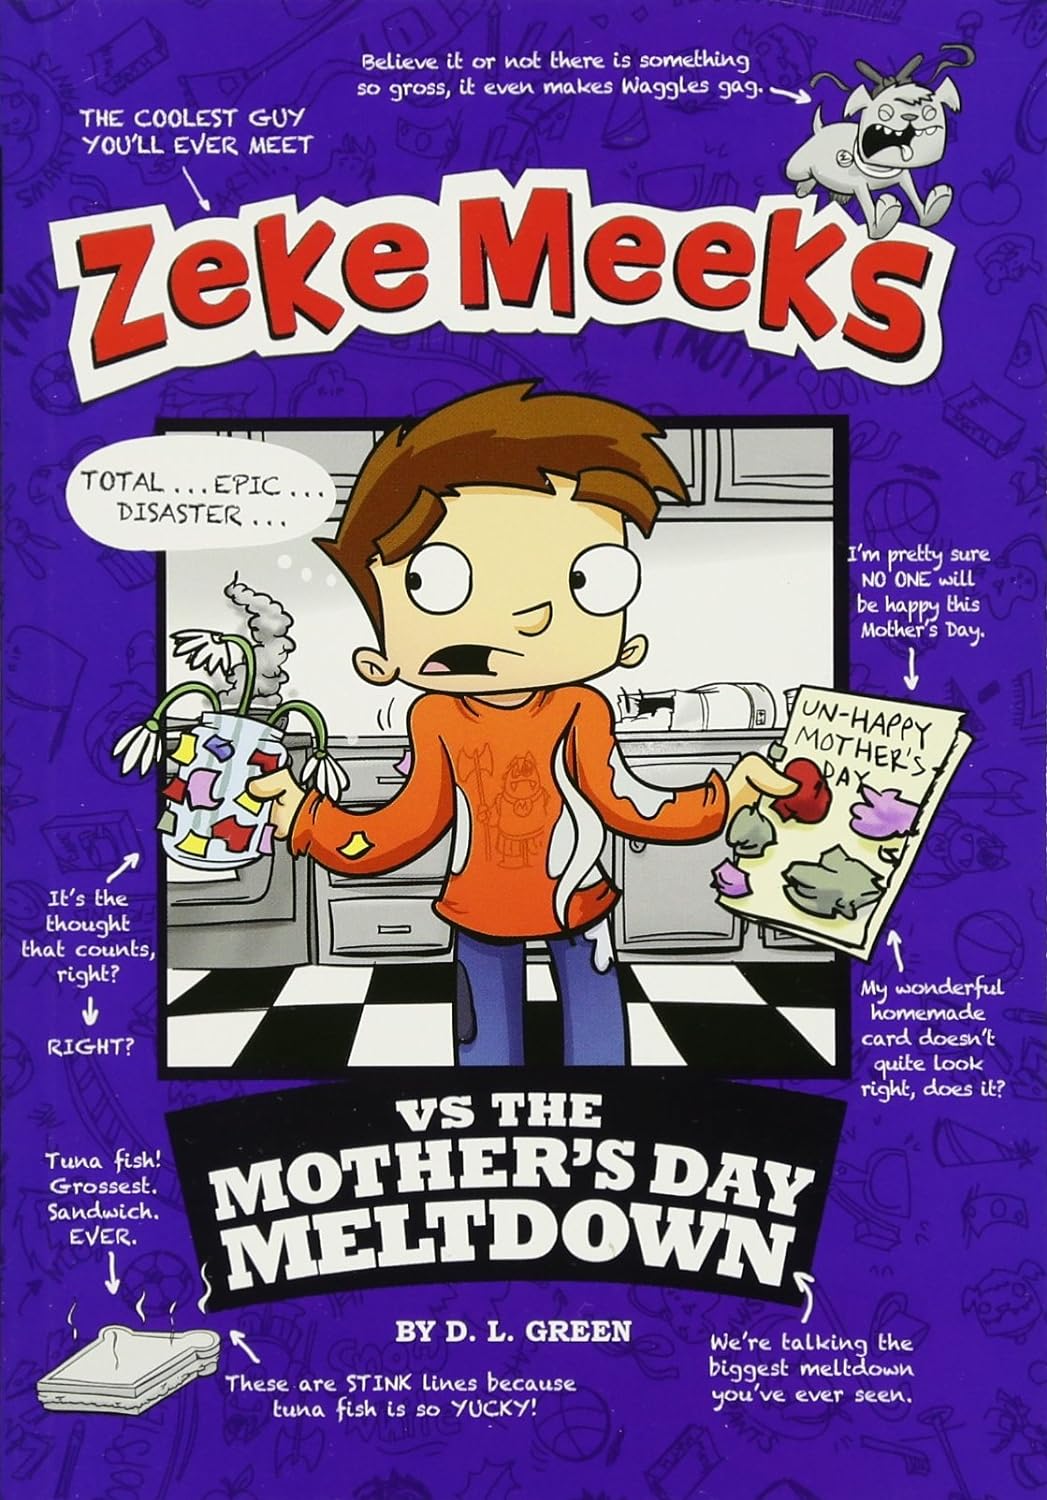 Zeke Meeks vs the Mother's Day Meltdown